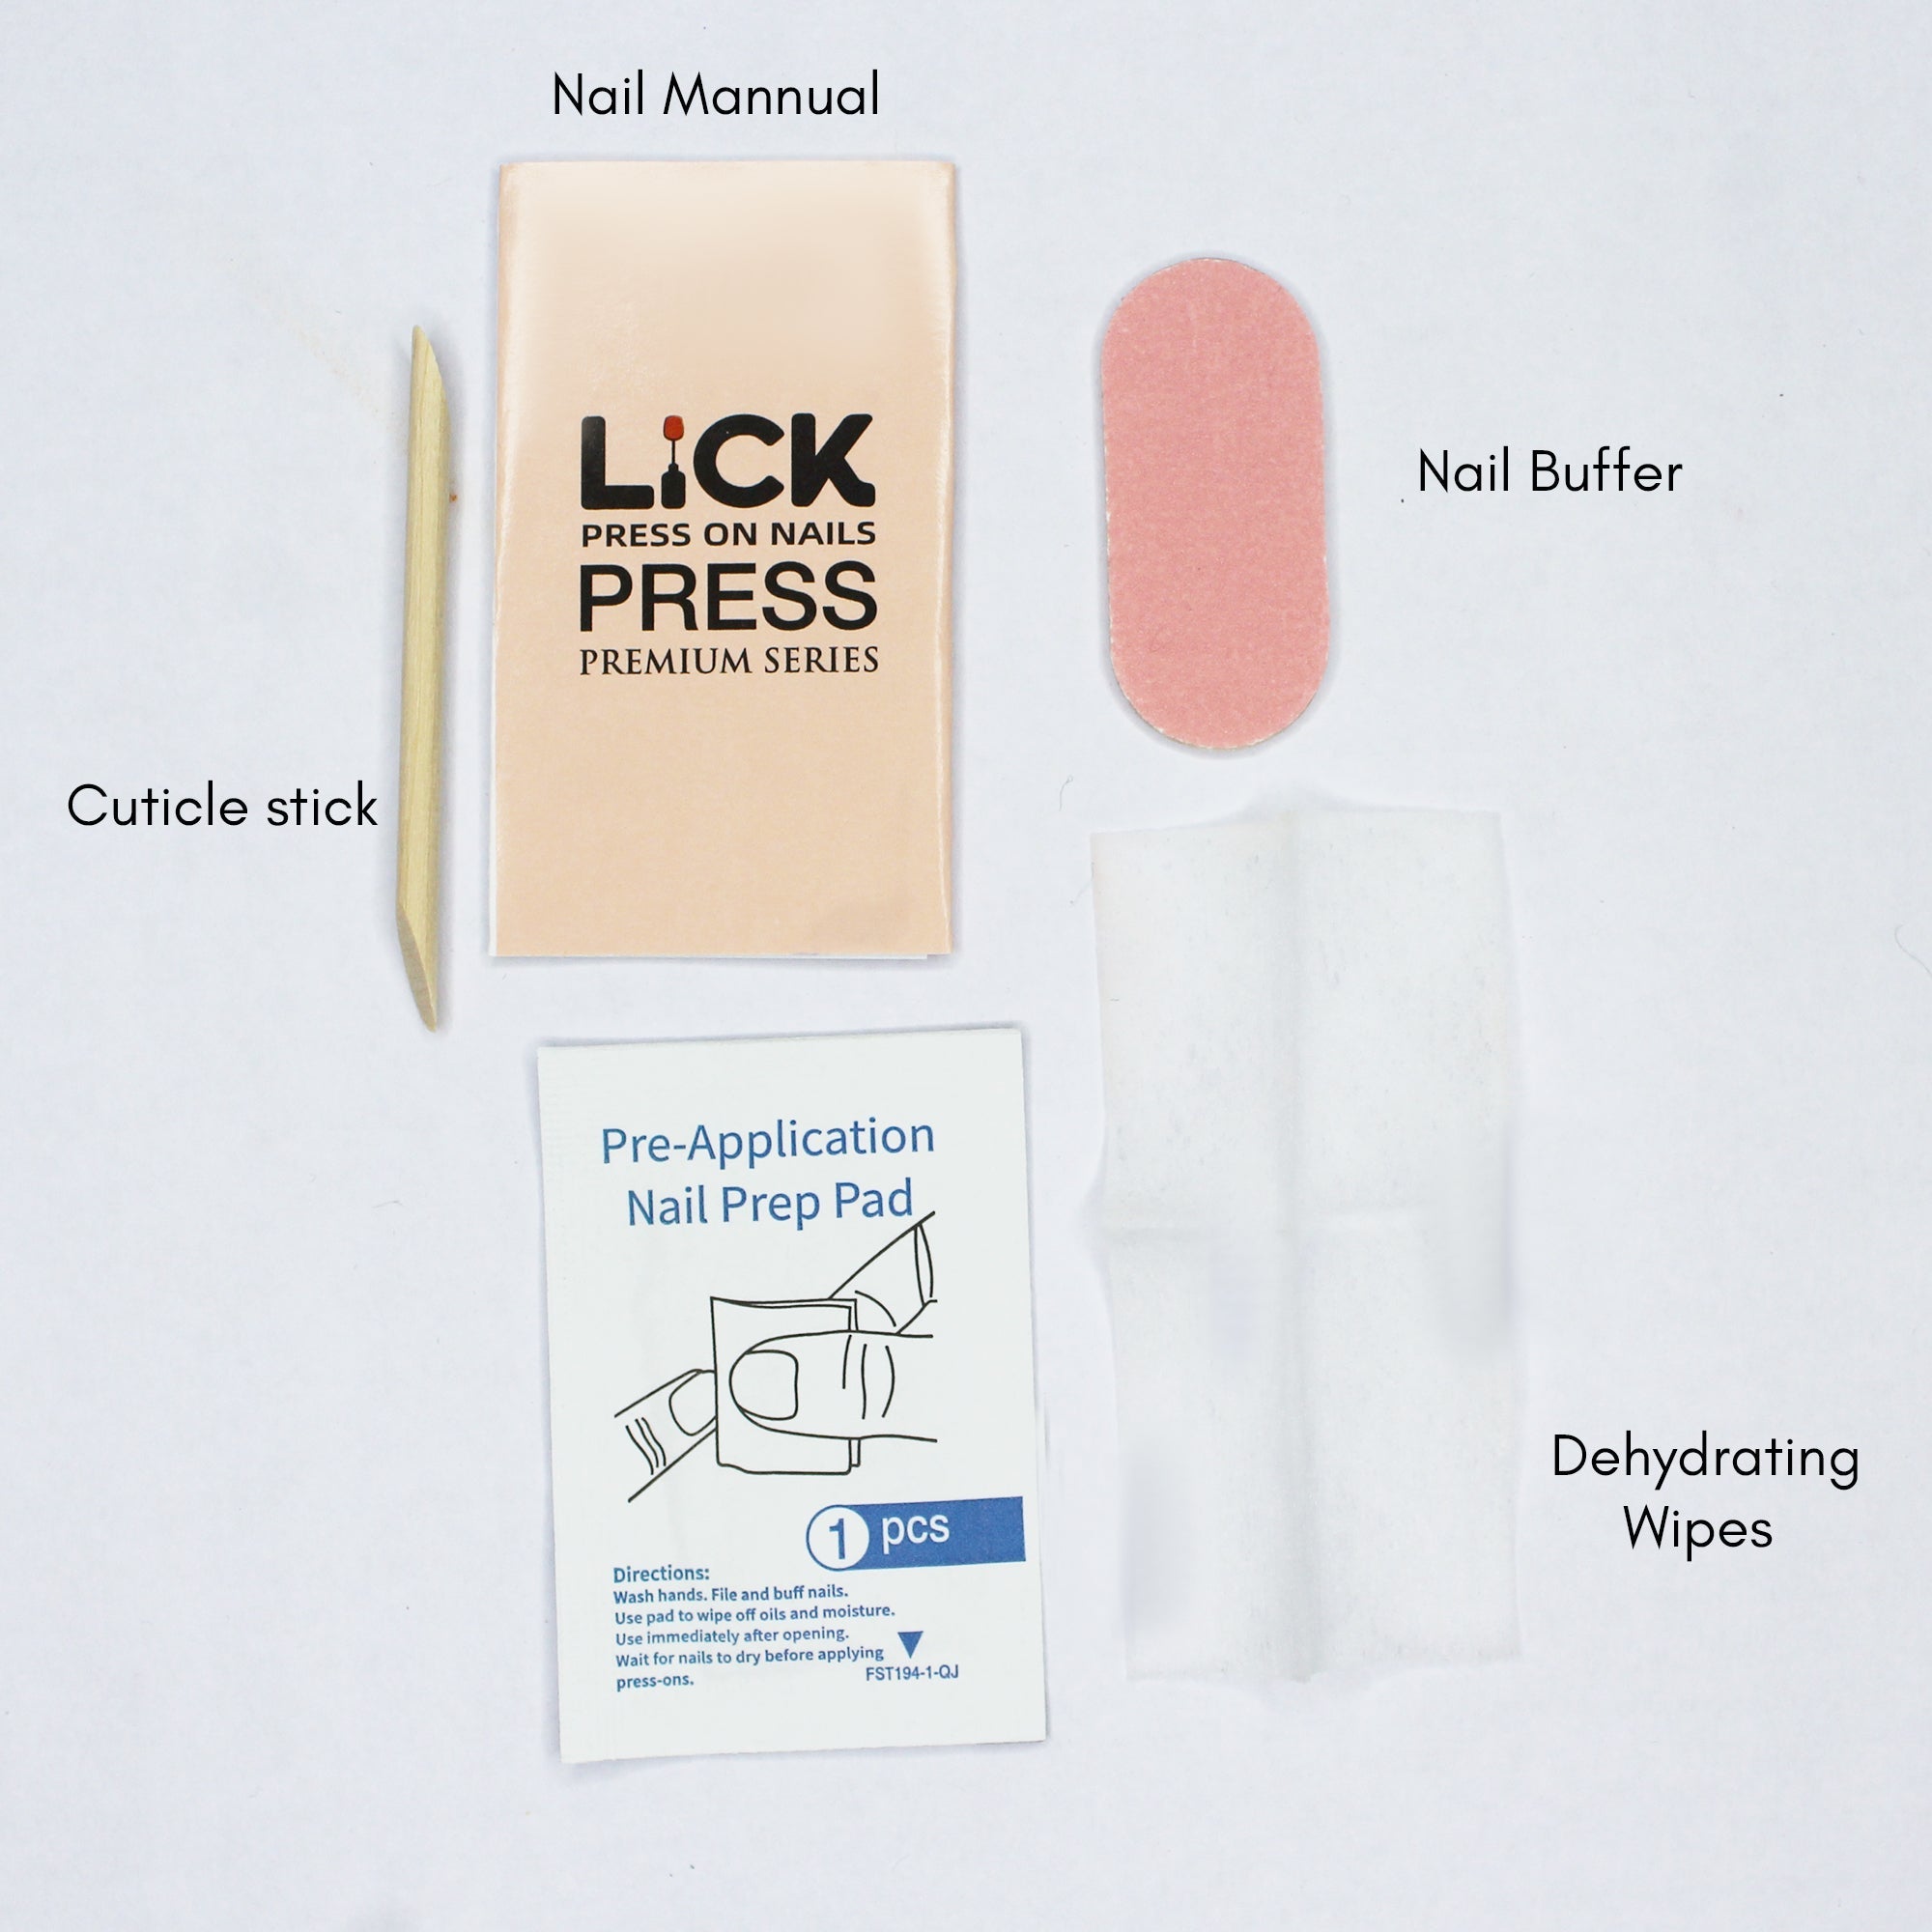 Lick Nail Glossy Finish Dark Grey With Stud Design Ballerina Shape Press On Nails Pack Of 28 Pcs